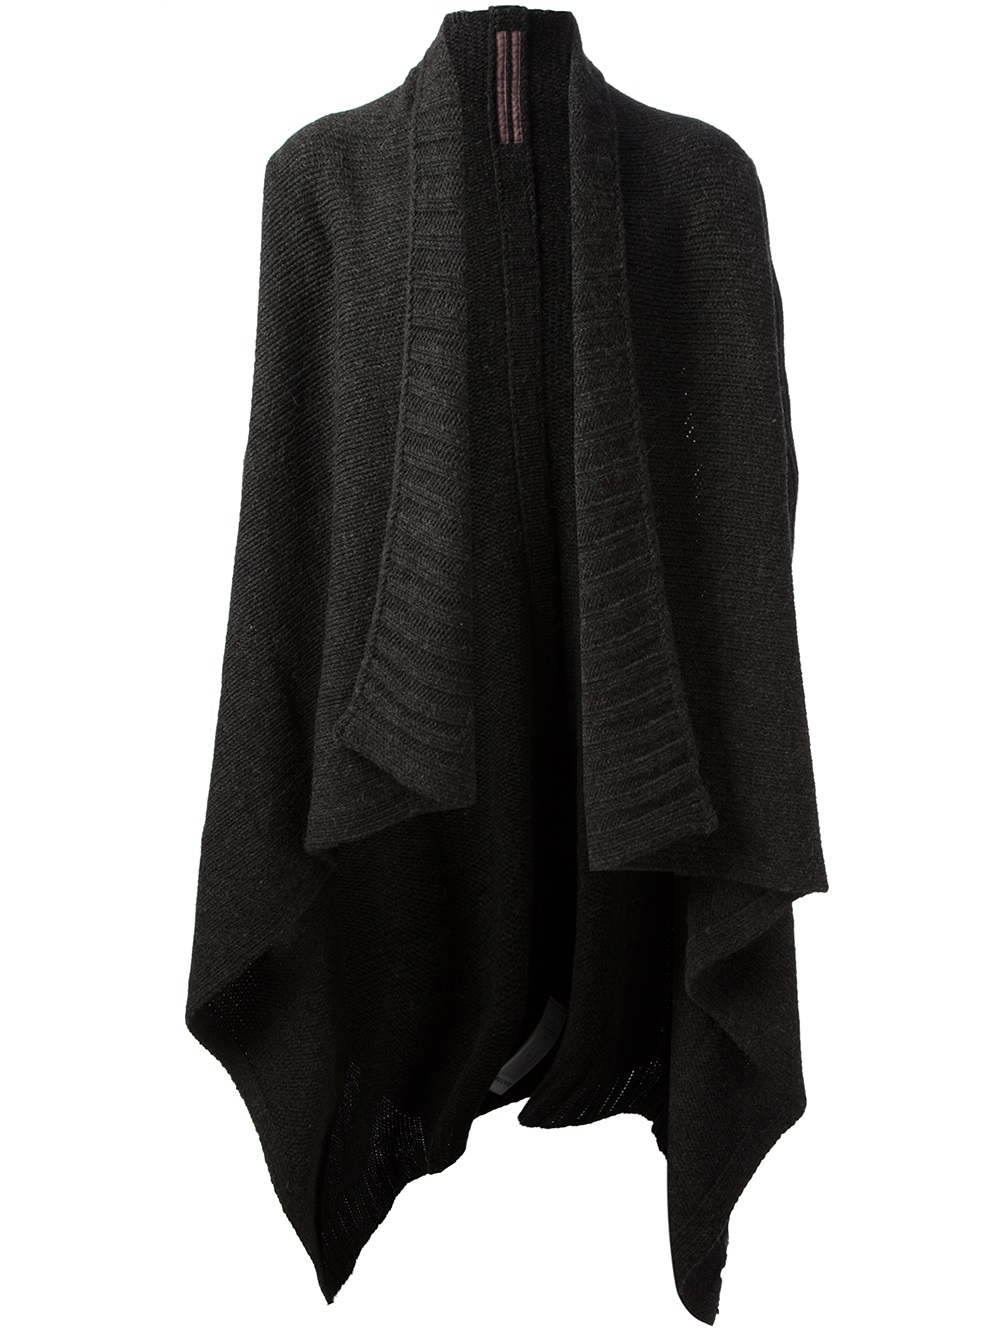 Lyst - Rick owens Oversized Knit Cardigan in Black for Men